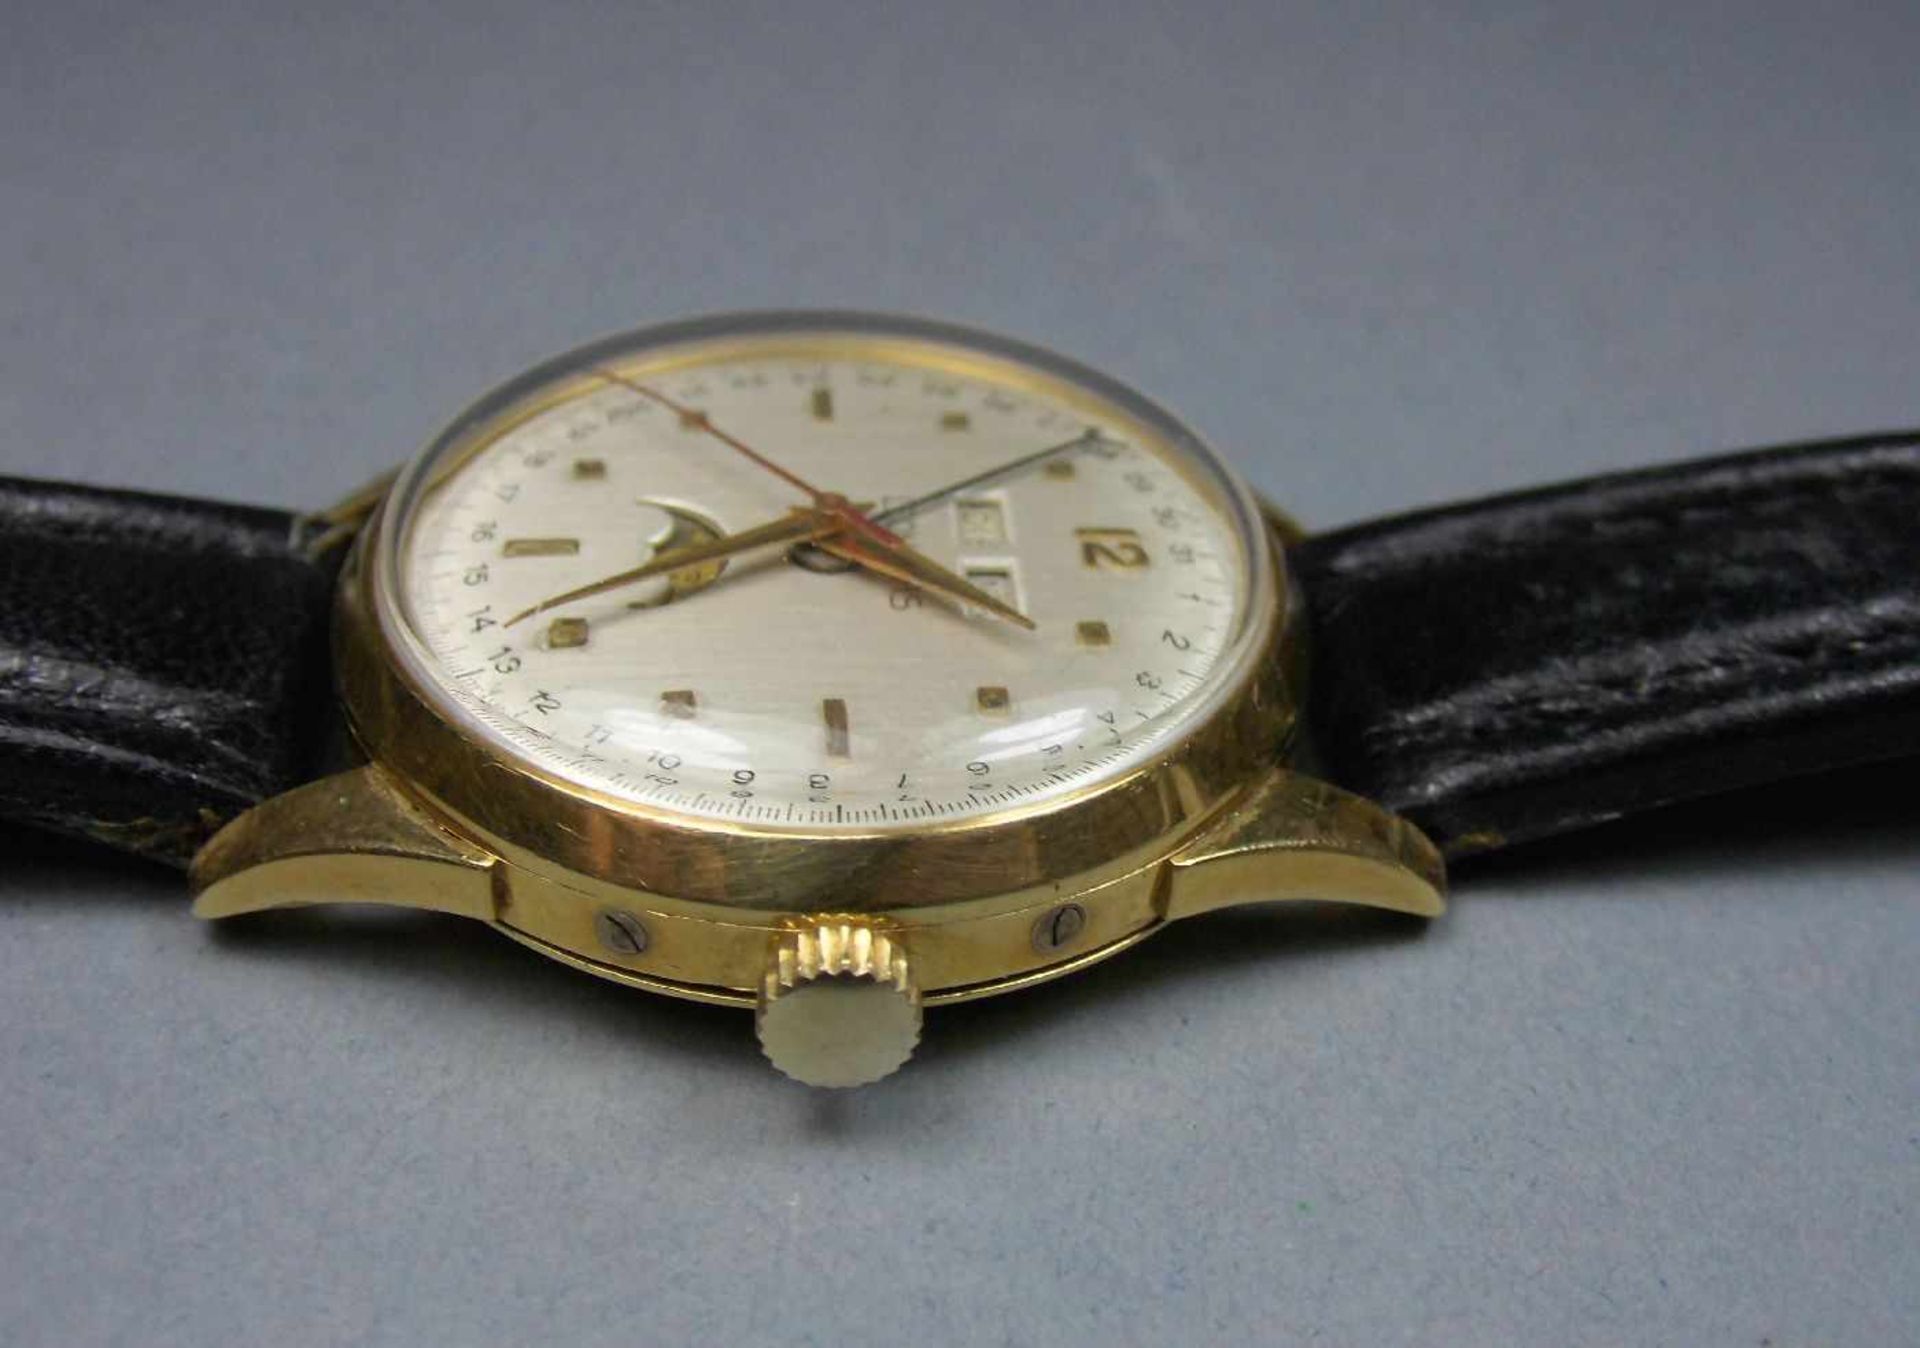 GOLDENE VINTAGE ARMBANDUHR / CHRONOGRAPH MIT VOLLKALENDER / wristwatch, Handaufzug, Manufaktur - Bild 4 aus 7